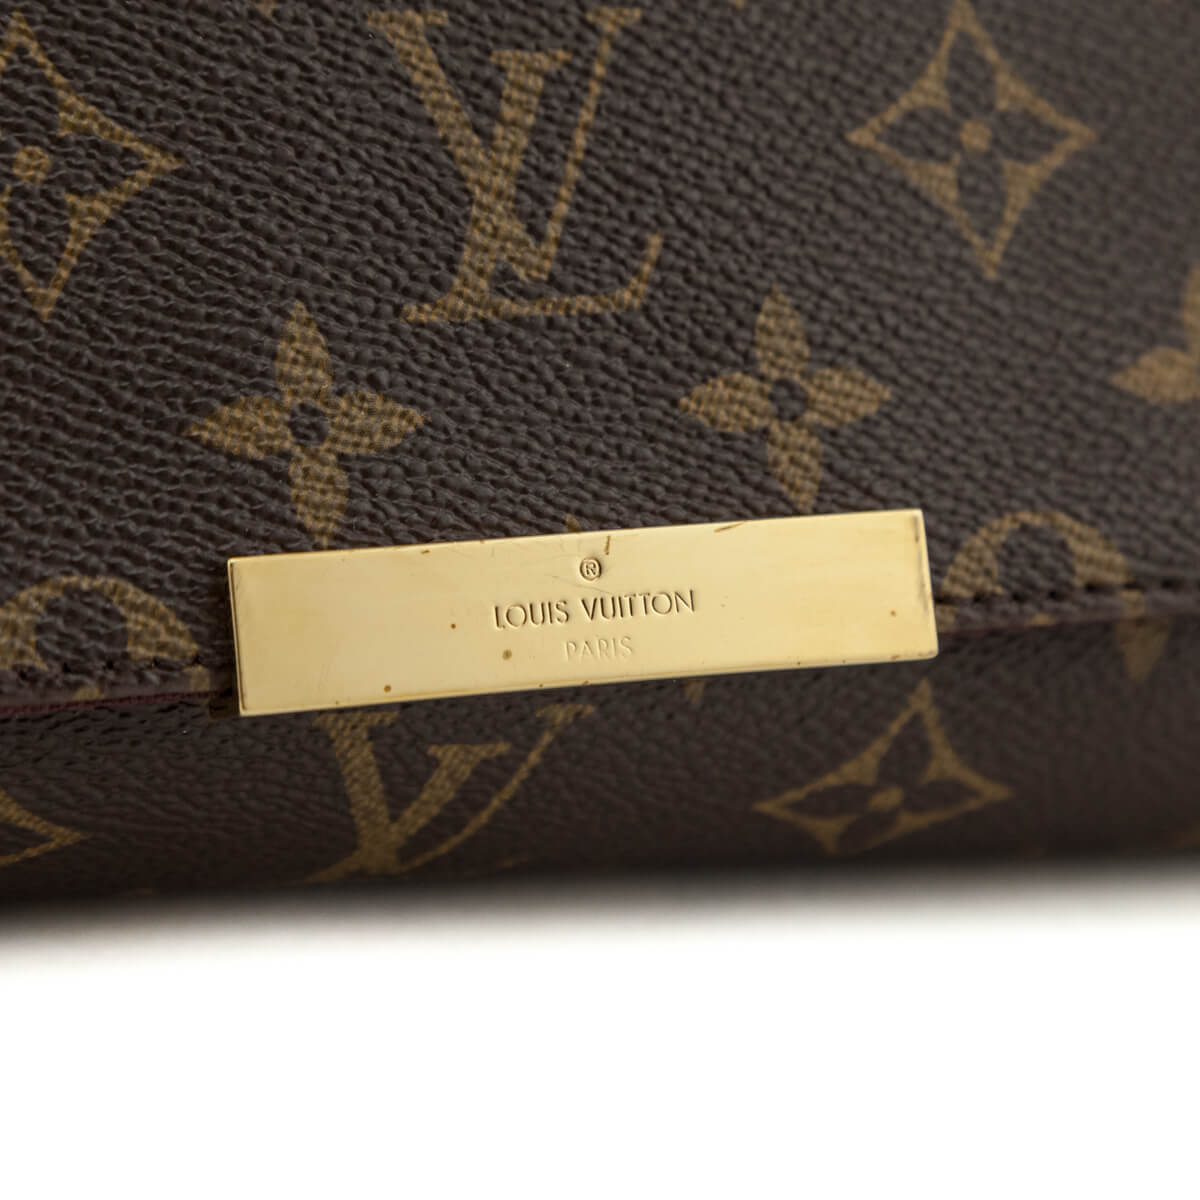 Pretty In Patina - Fan favorite Louis Vuitton handbags just in! Like this  Monogram Delightful! Call or message for details 😉 #PrettyinPatina #Omaha  #Oldmarket #Monogram #LV #Delightful #Artsy #Speedy #crossbody #Newbagday